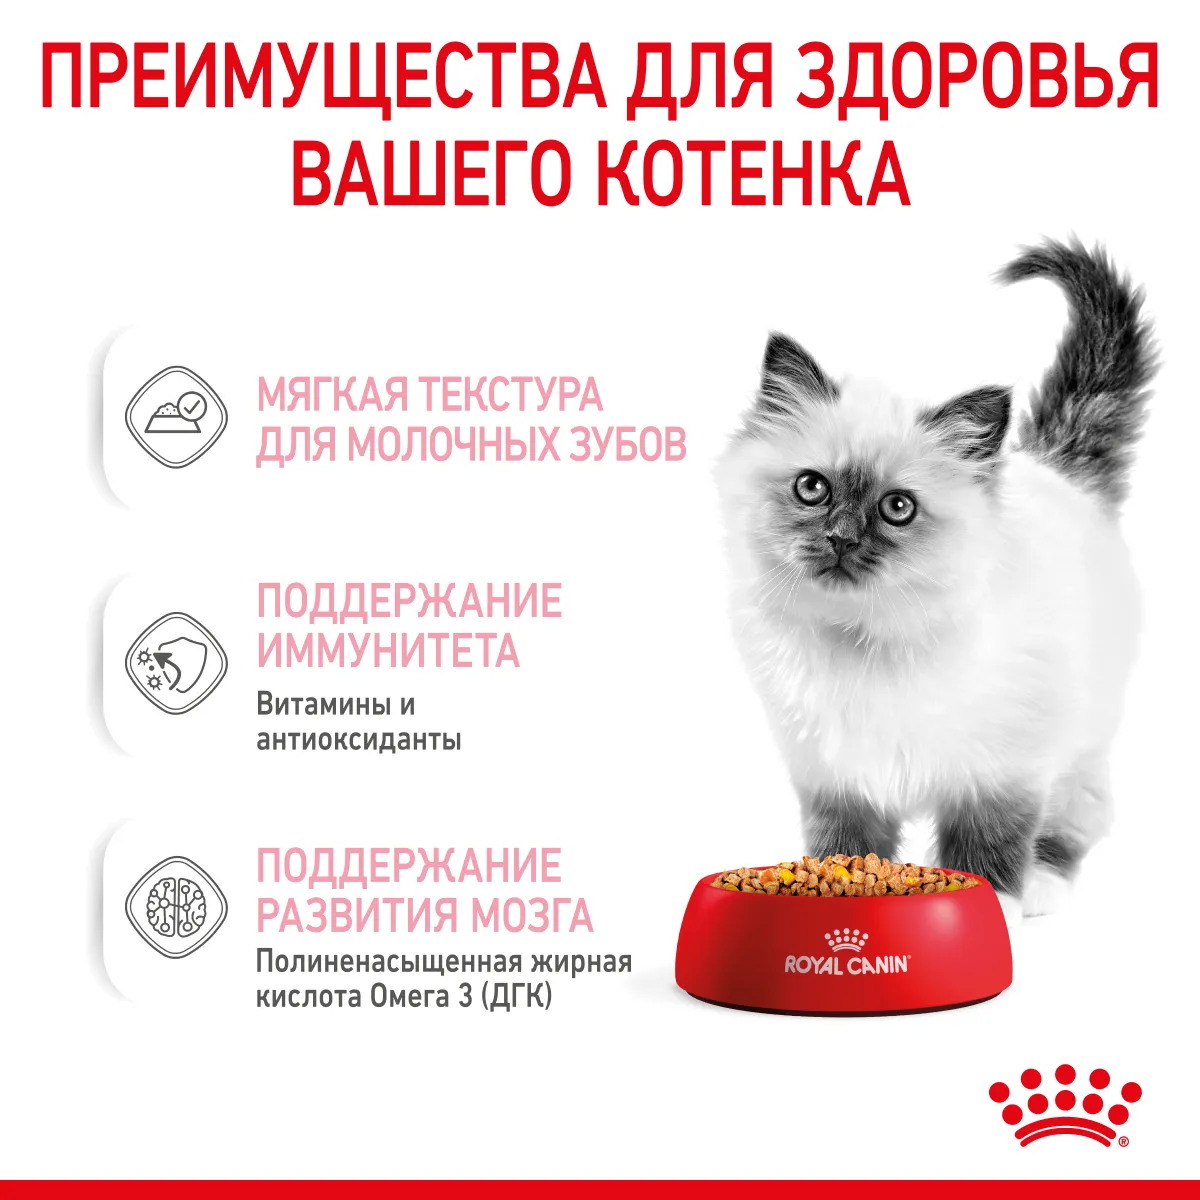 Влажный корм для котят Royal Canin Kitten кусочки в желе, 85 г